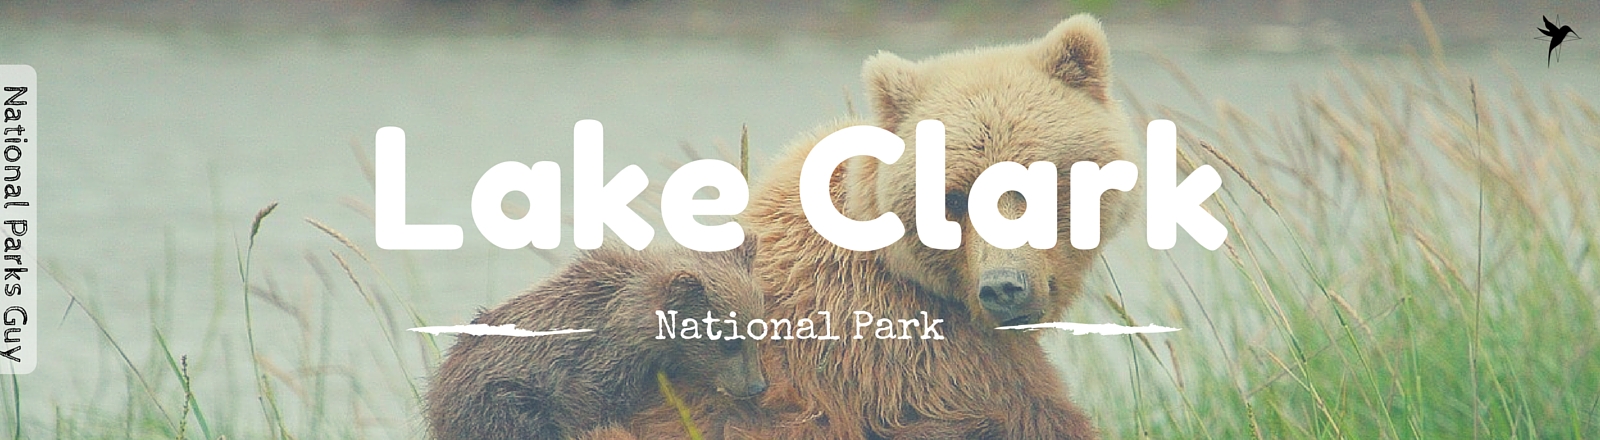 Lake Clark National Park, USA, National Parks Guy, Stories, Tales, Adventures, Wildlife